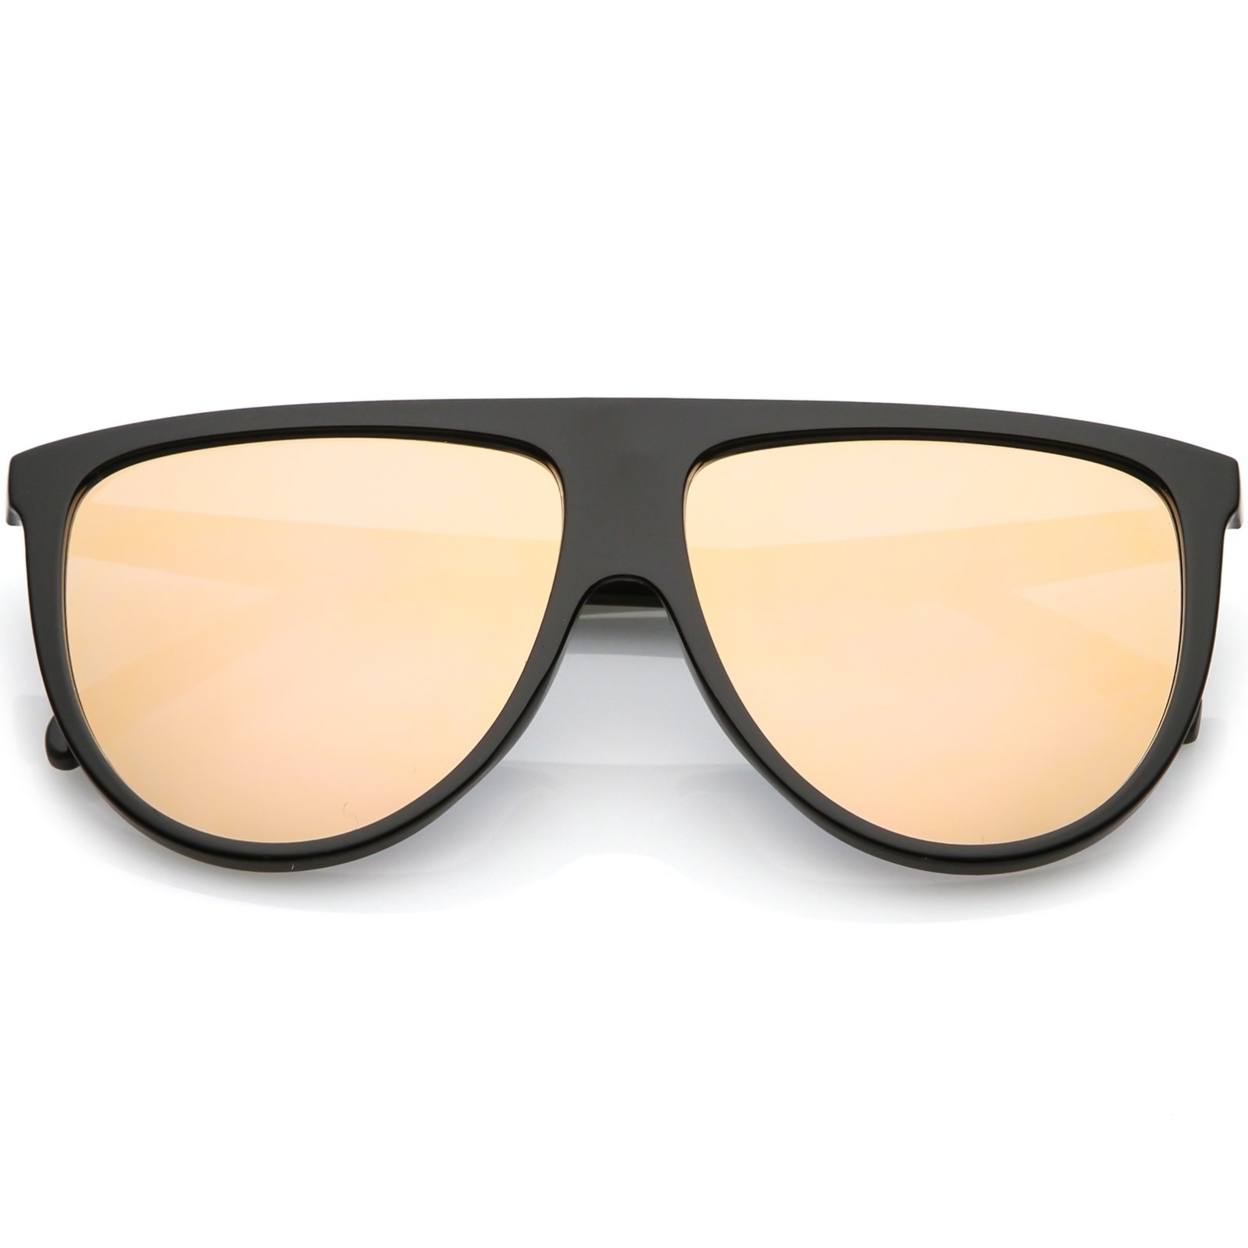 Oversize Modern Aviator Sunglasses Flat Top Color Mirrored Lens 59mm - Black / Pink Mirror